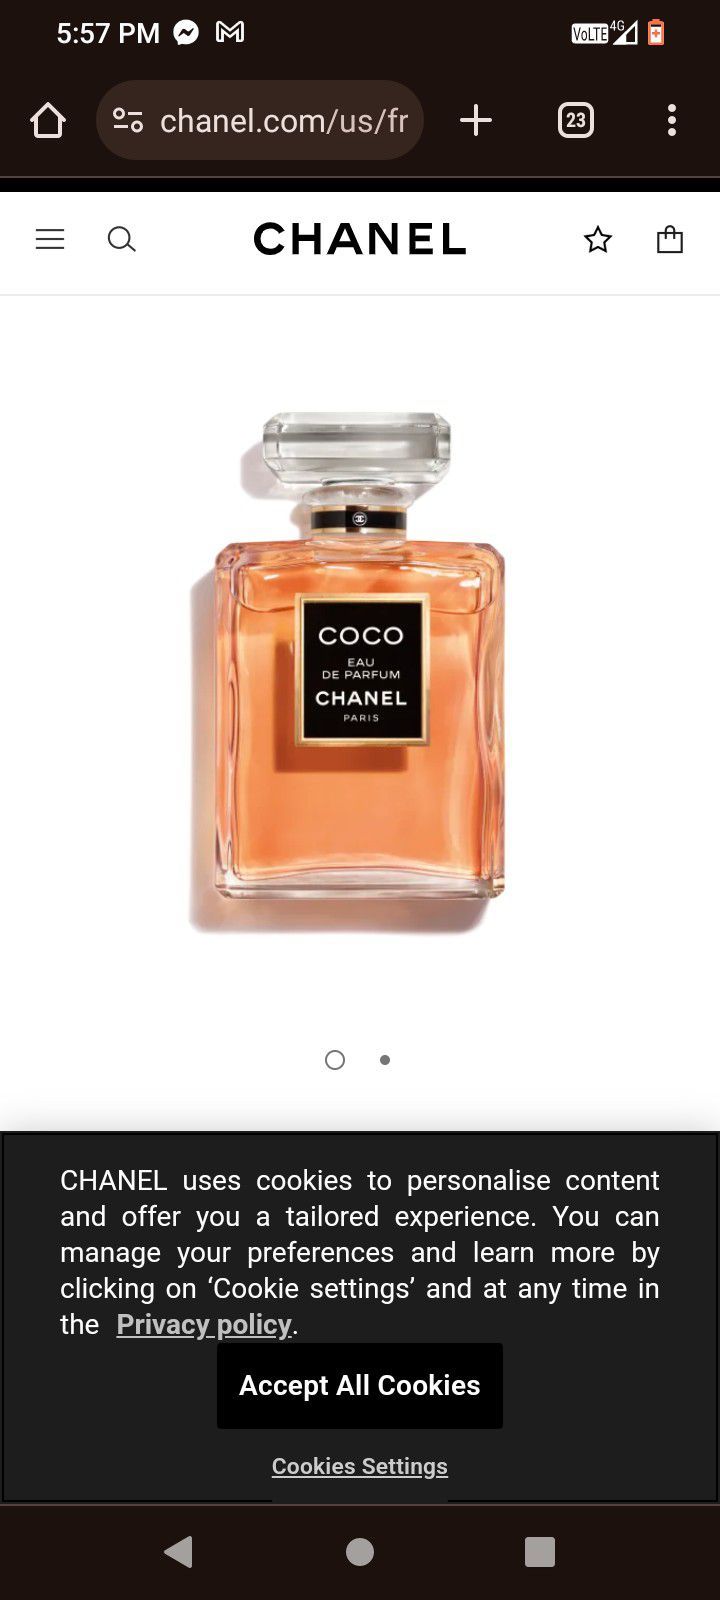 Coco Chanel mademoiselle 100 ml 